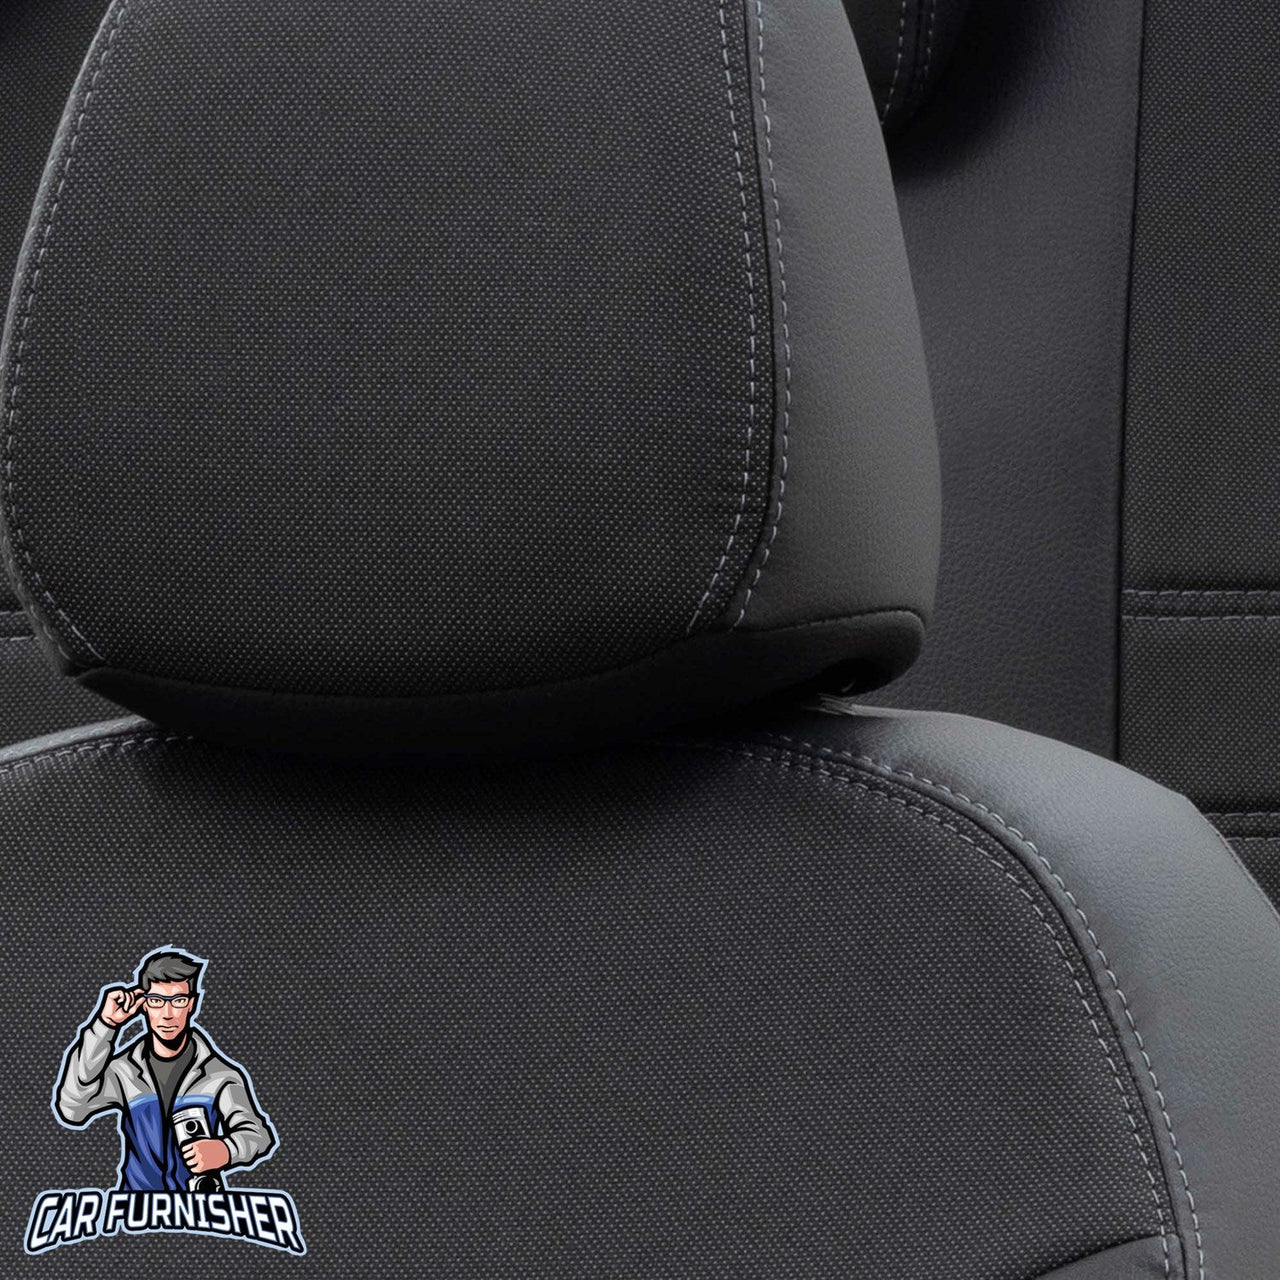 Mitsubishi Eclipse Cross Seat Covers Paris Leather & Jacquard Design Black Leather & Jacquard Fabric